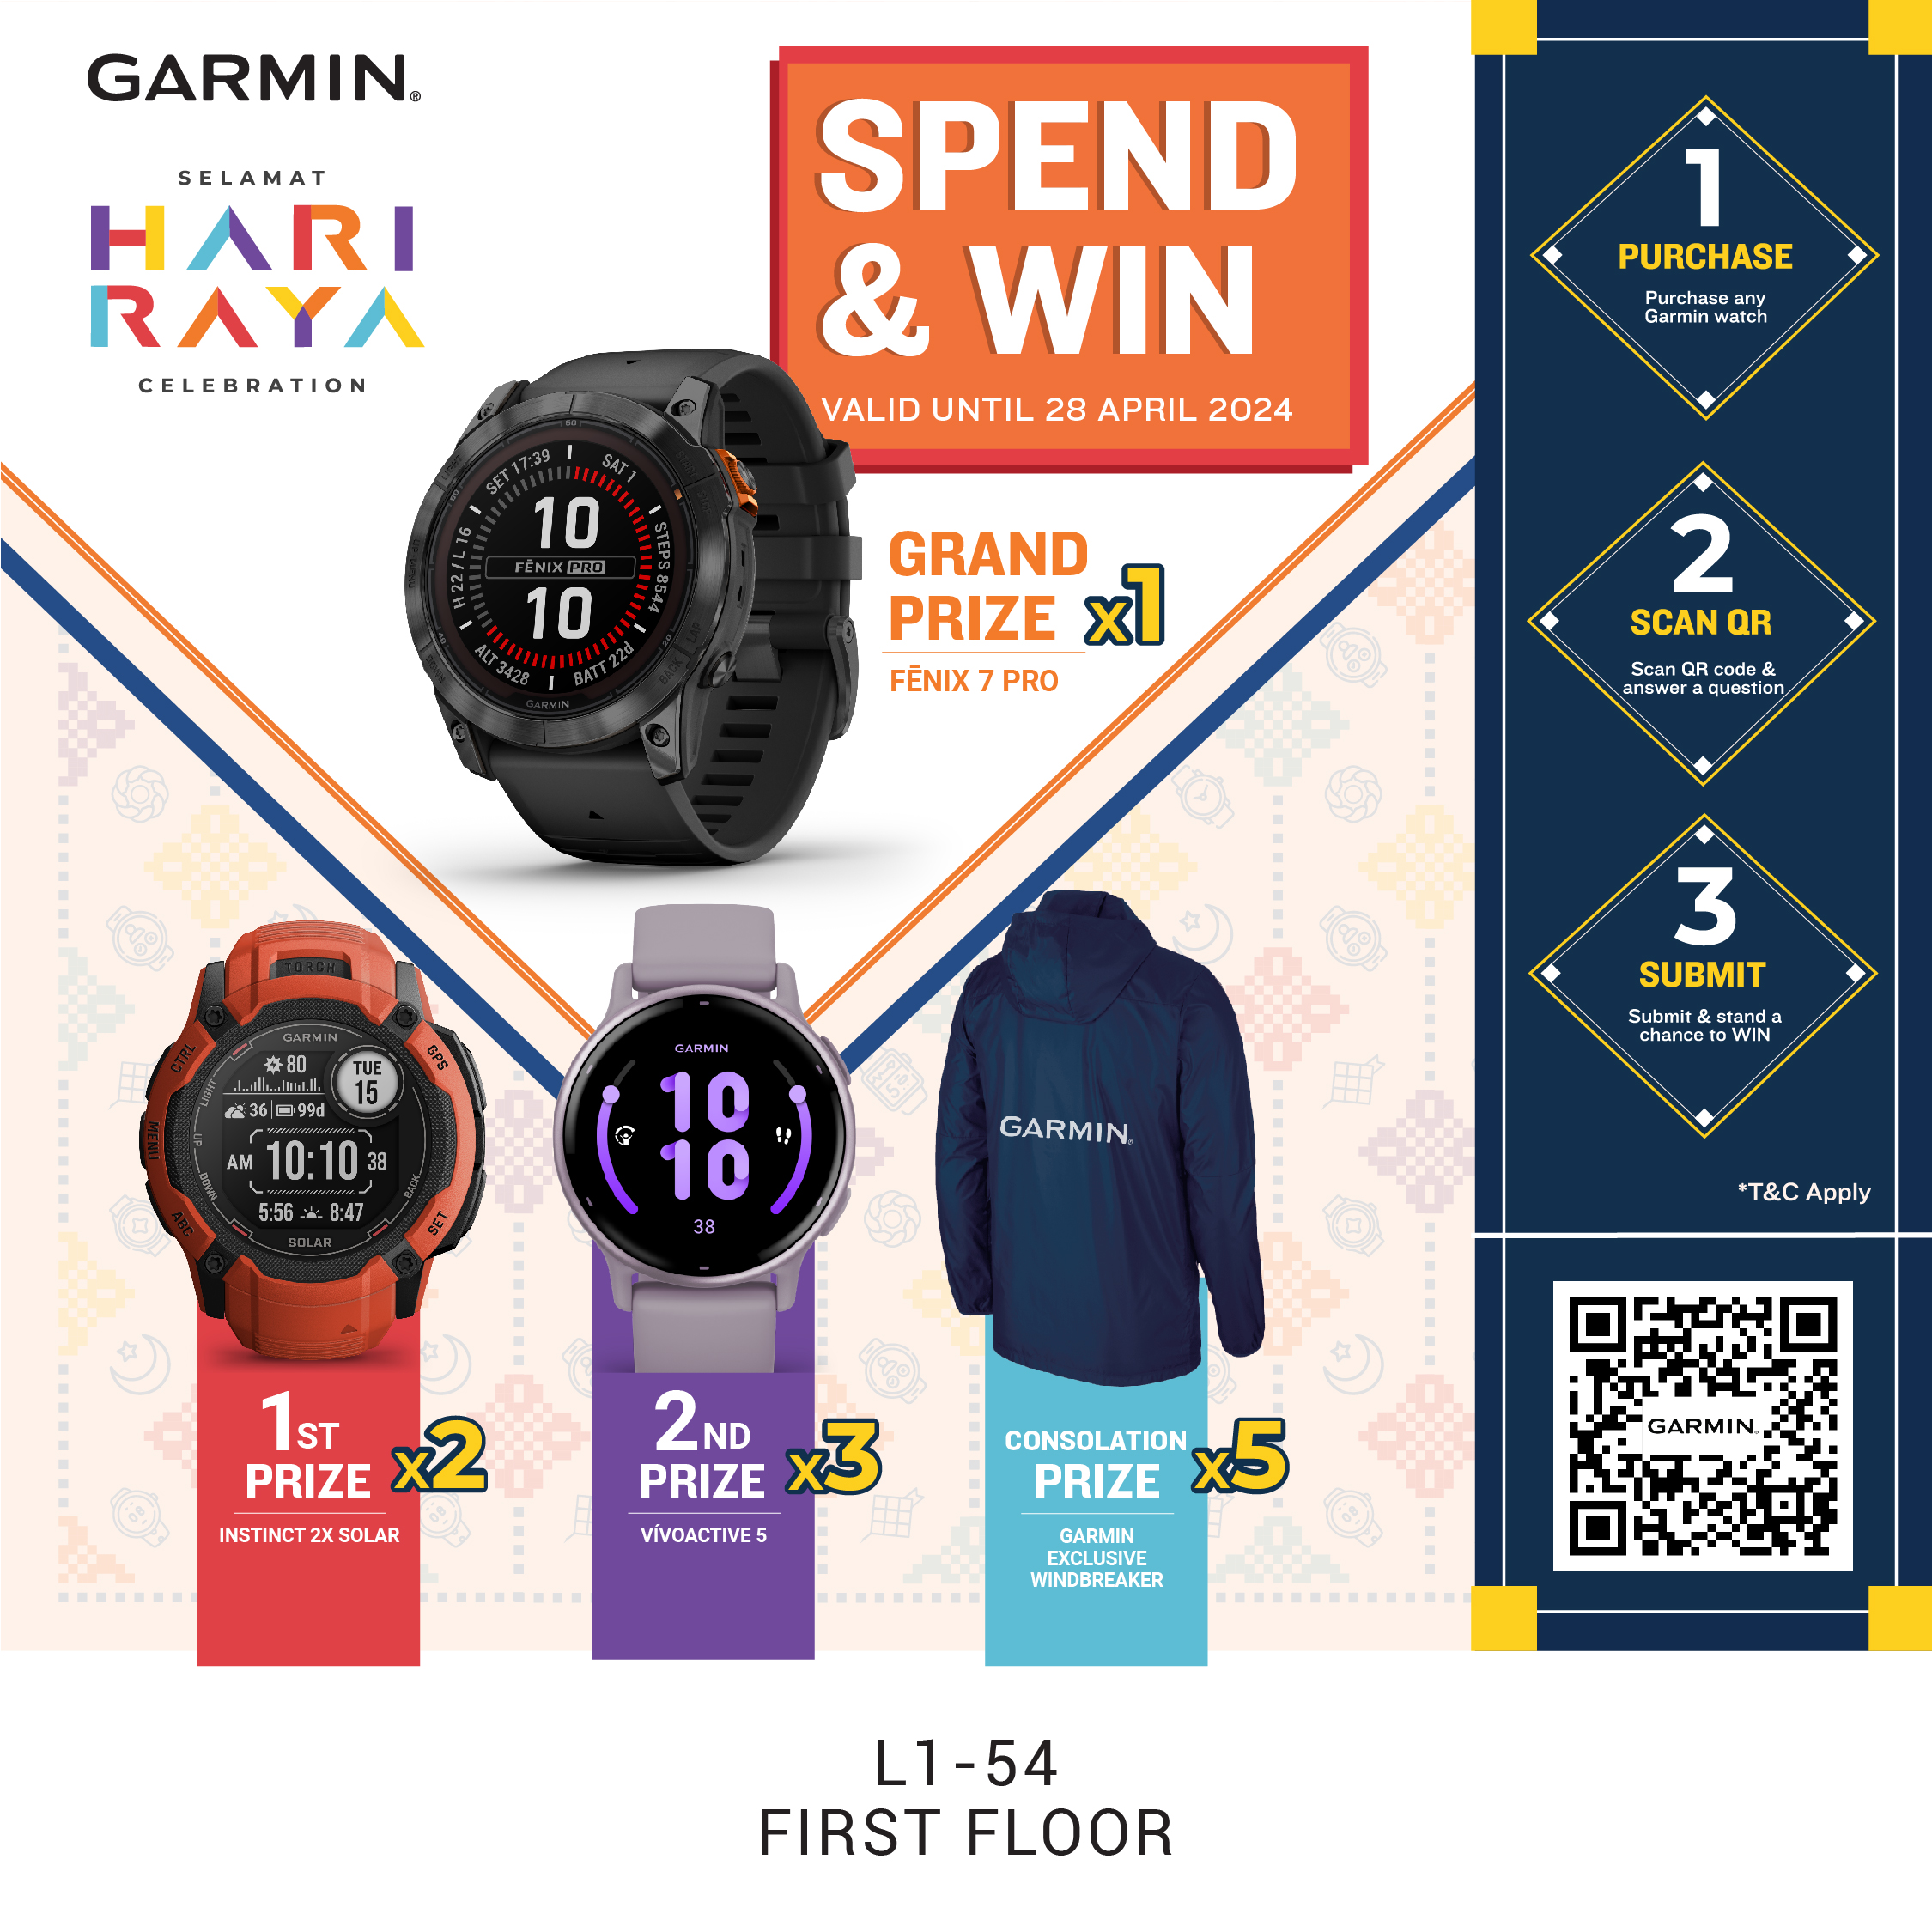 Lalaport Mall Digital Ads Spend & Win Hari Raya Promo (1080 x 1080 px) - Post-01.jpg